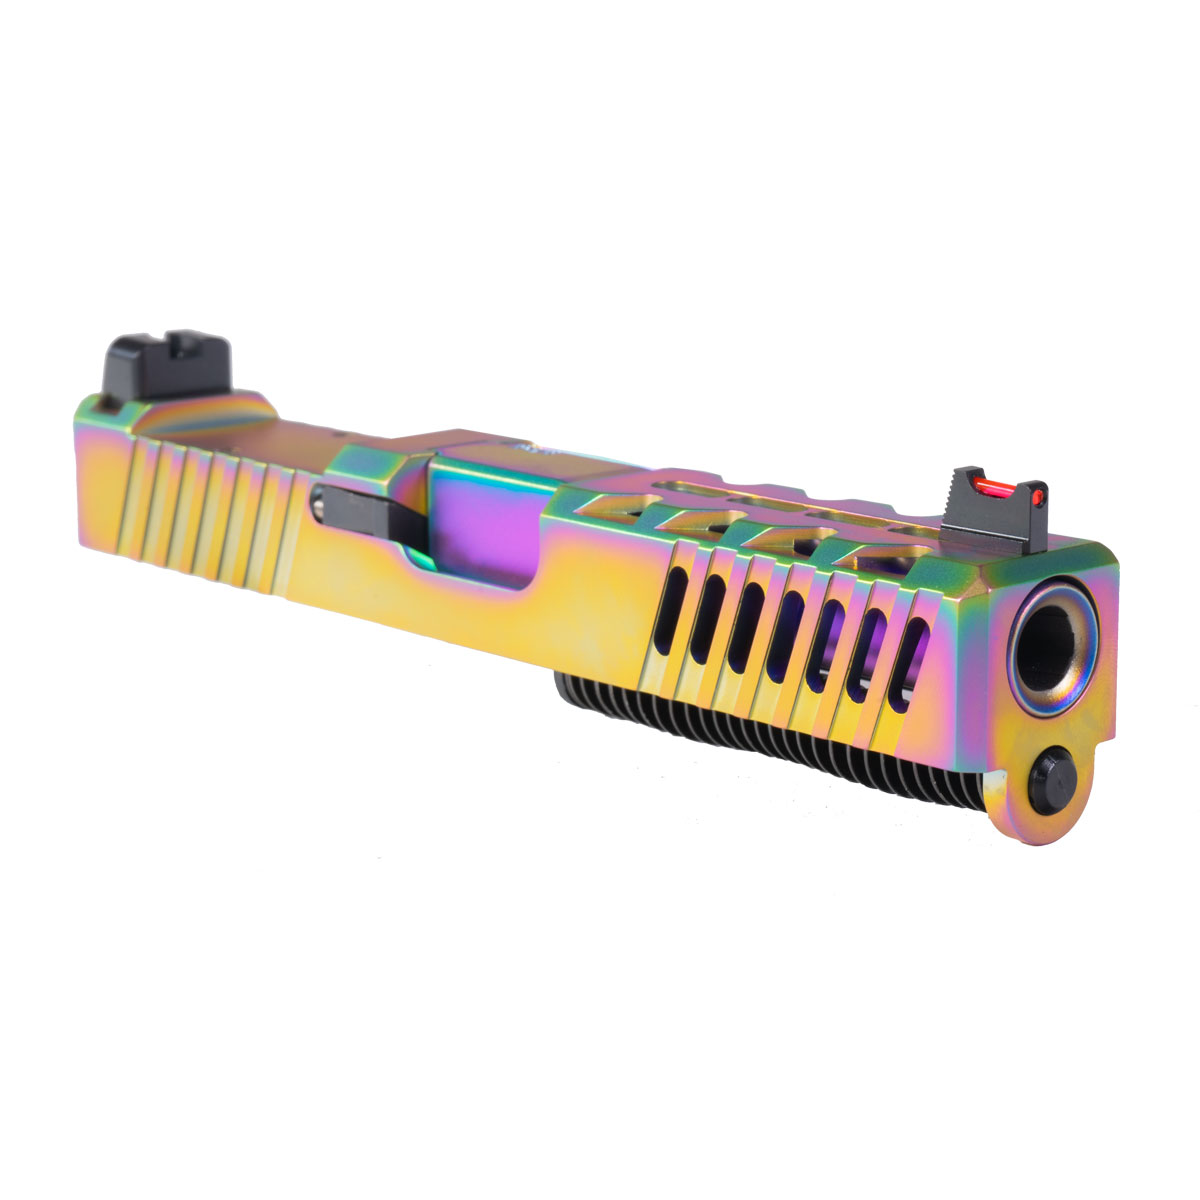 MMC 'Polychrome Pursuit' 9mm Complete Slide Kit - Glock 19 Gen 1-2 Compatible